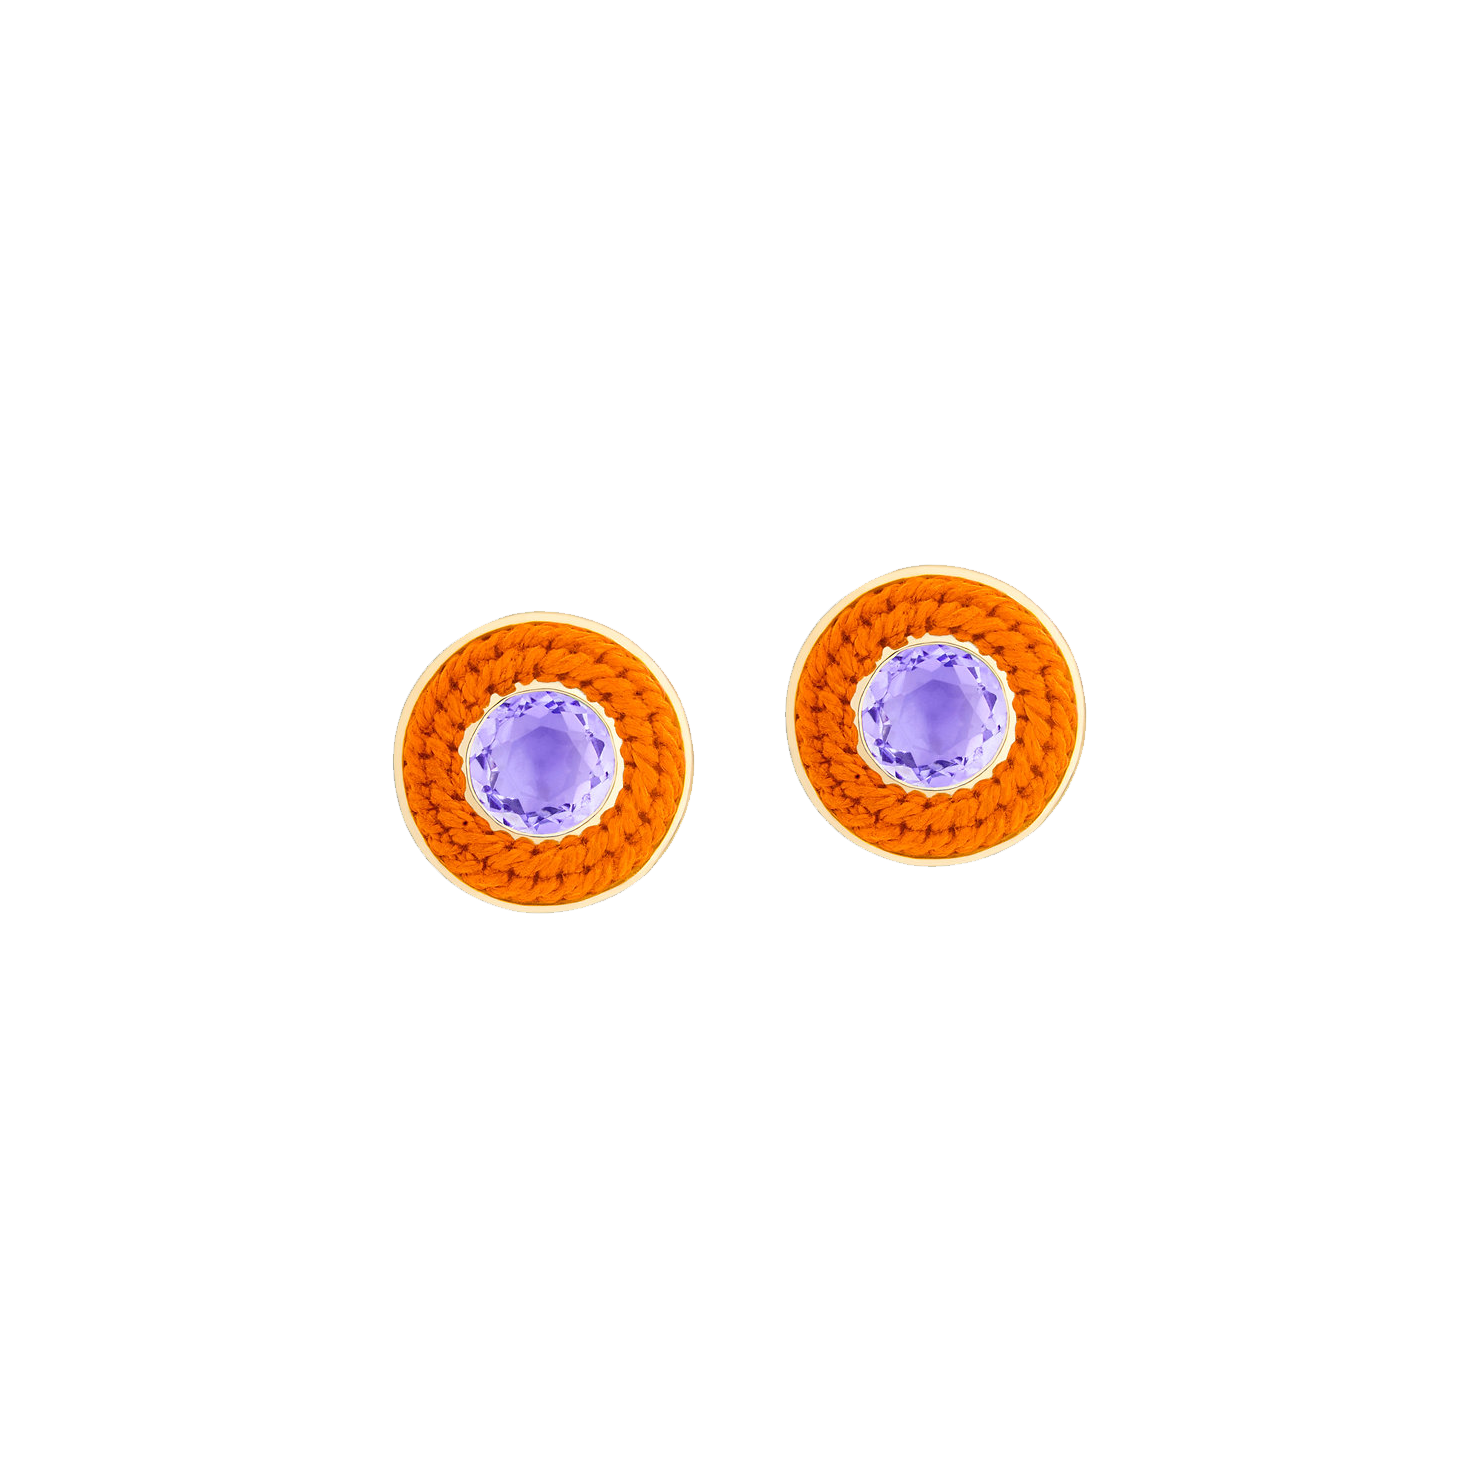 Small Orange Pandeiro Earrings with Amethyst